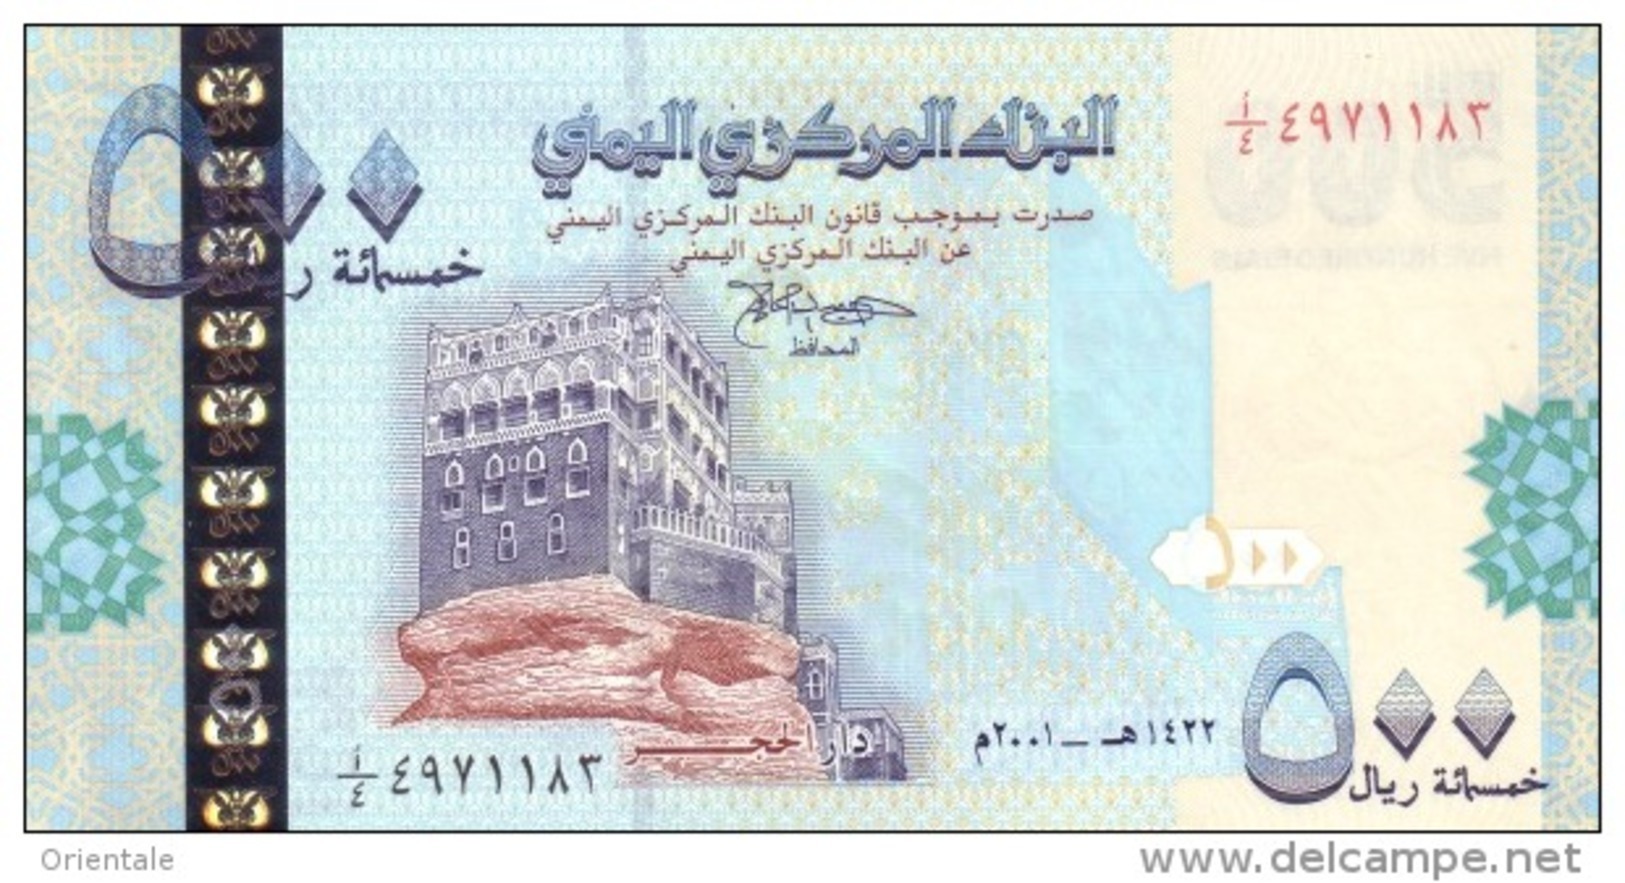 YEMEN ARAB P. 31 500 R 2001 UNC - Yemen